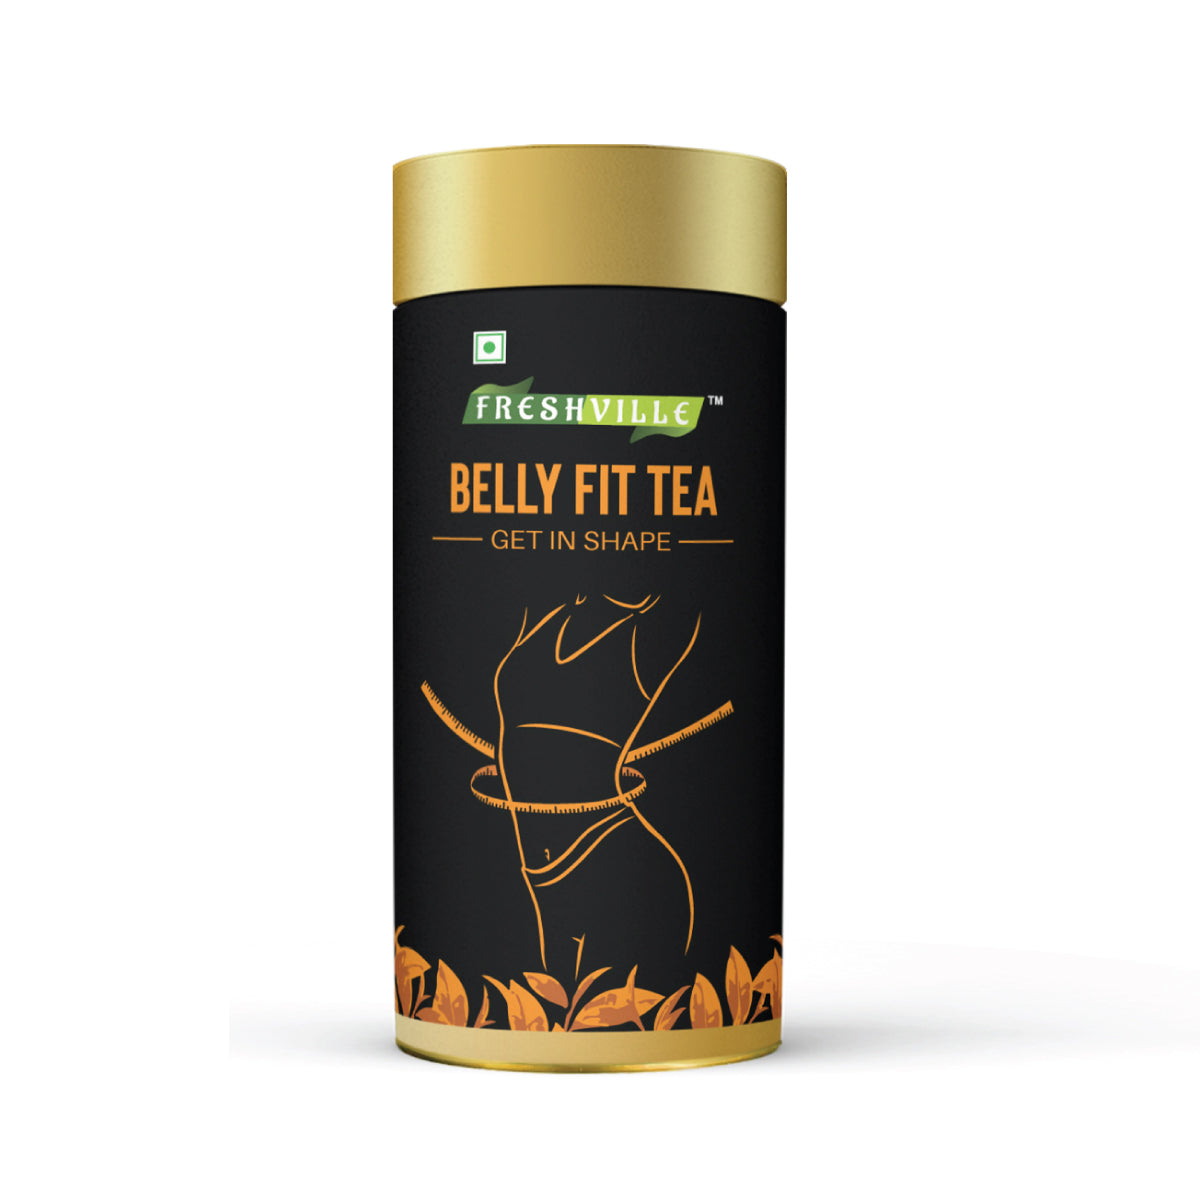 Freshville Belly Fit Tea